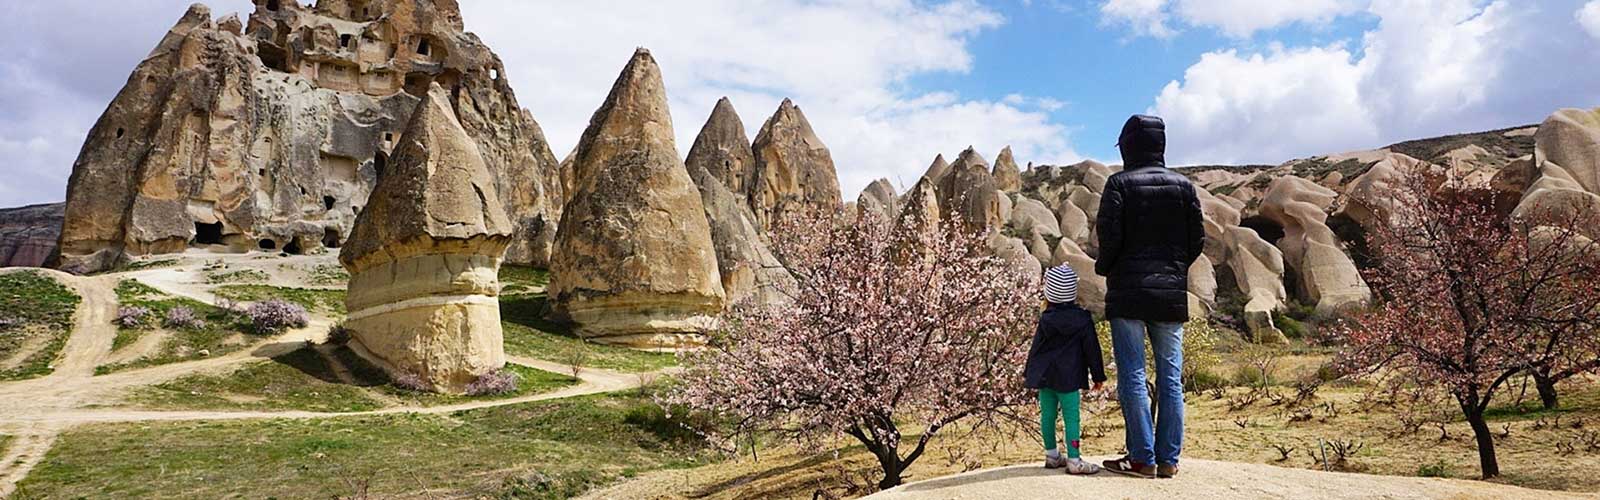 Cappadocia Travel with Kids